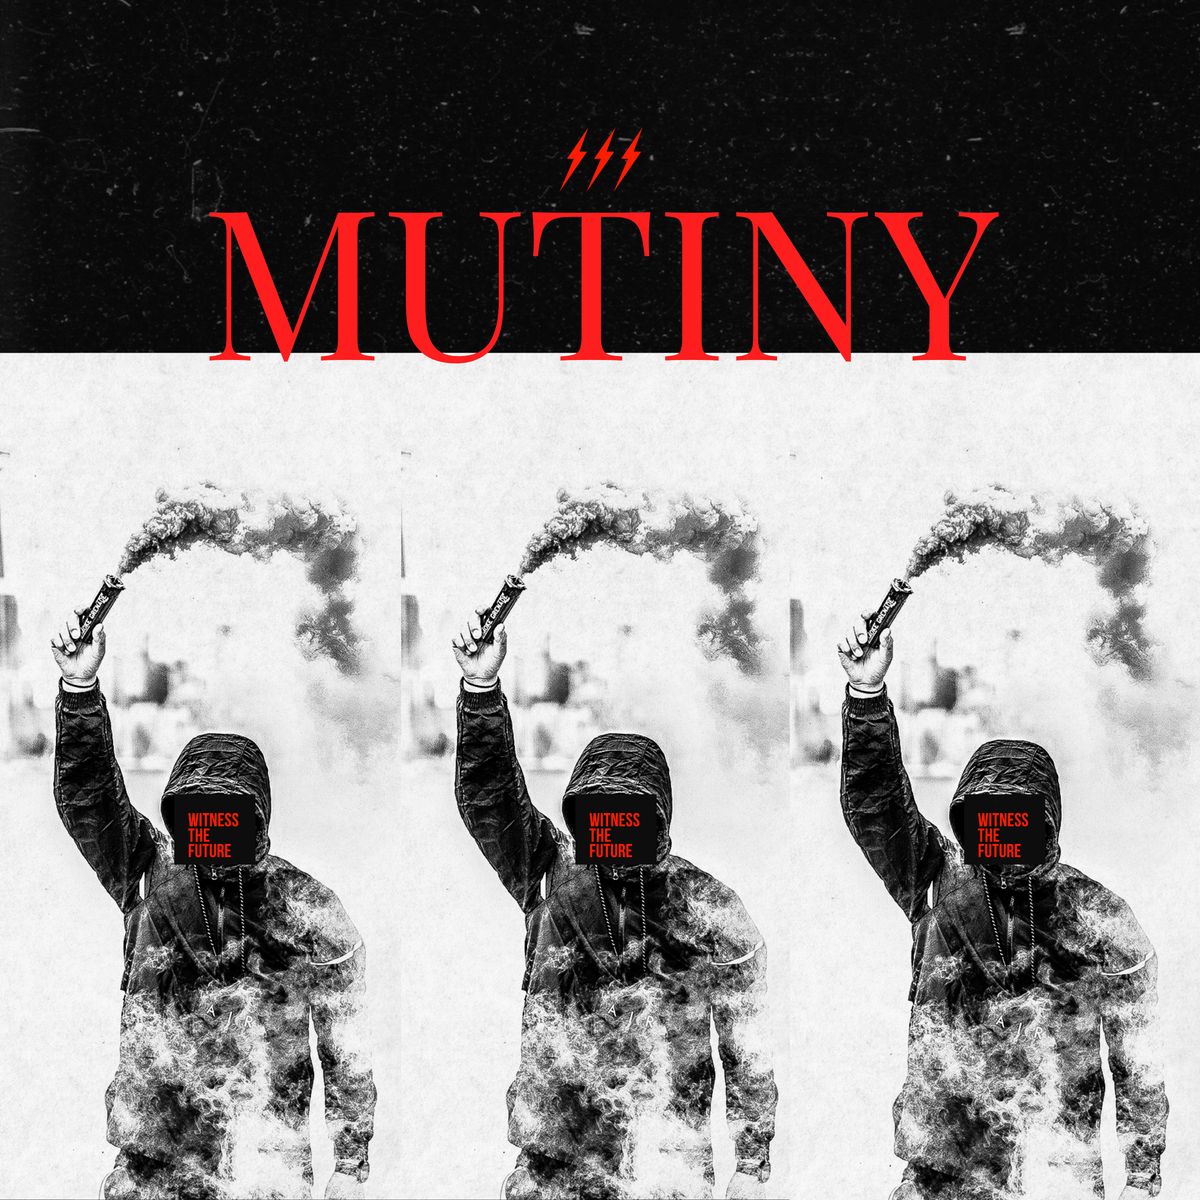 Mutiny: Witness the future